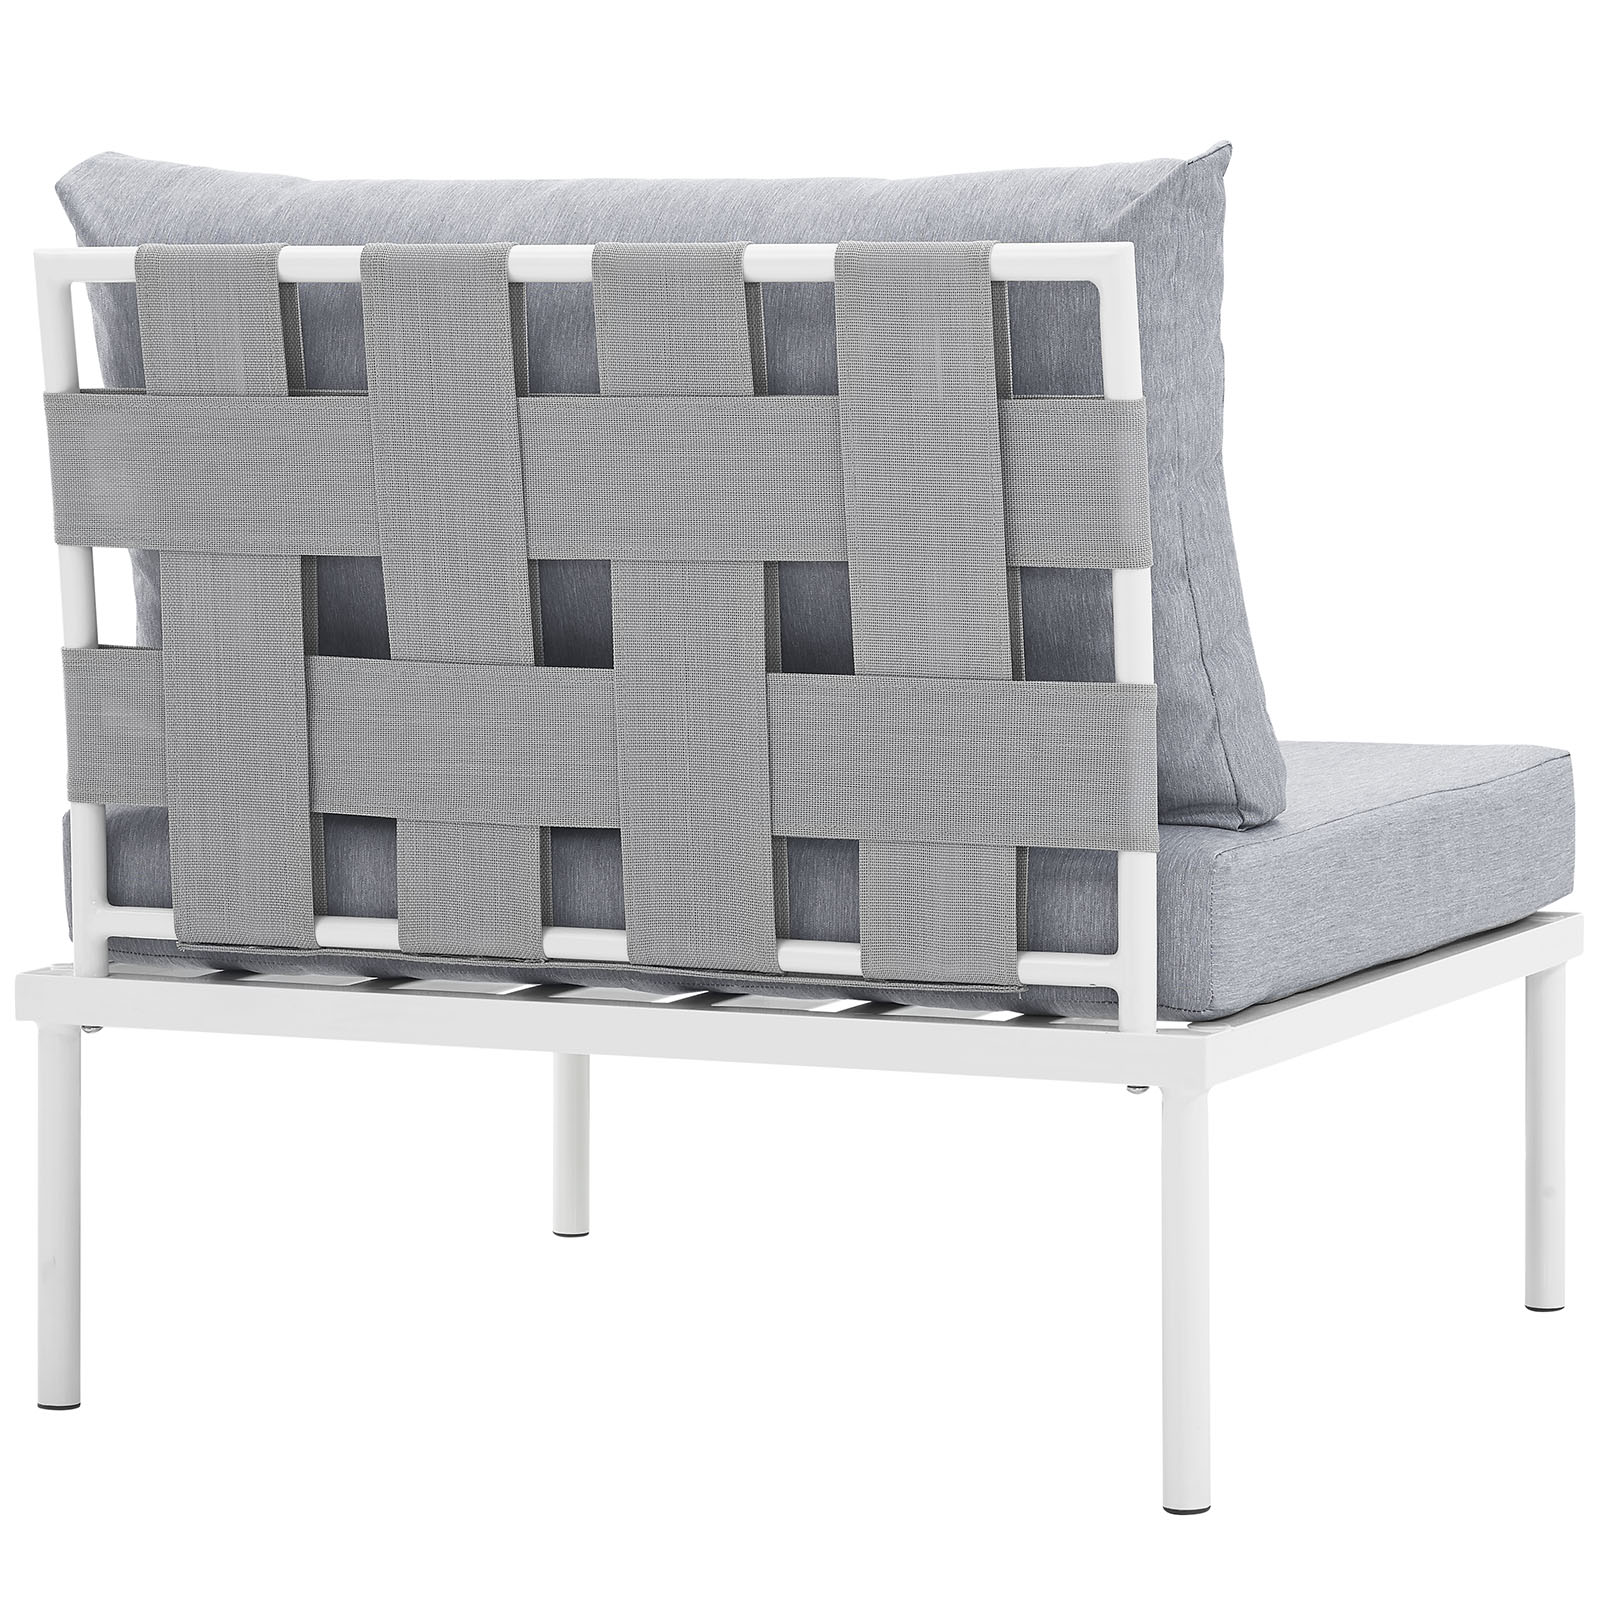 Modern Contemporary Urban Design Outdoor Patio Balcony Lounge Chair, Grey White Gray, Rattan - image 4 of 5